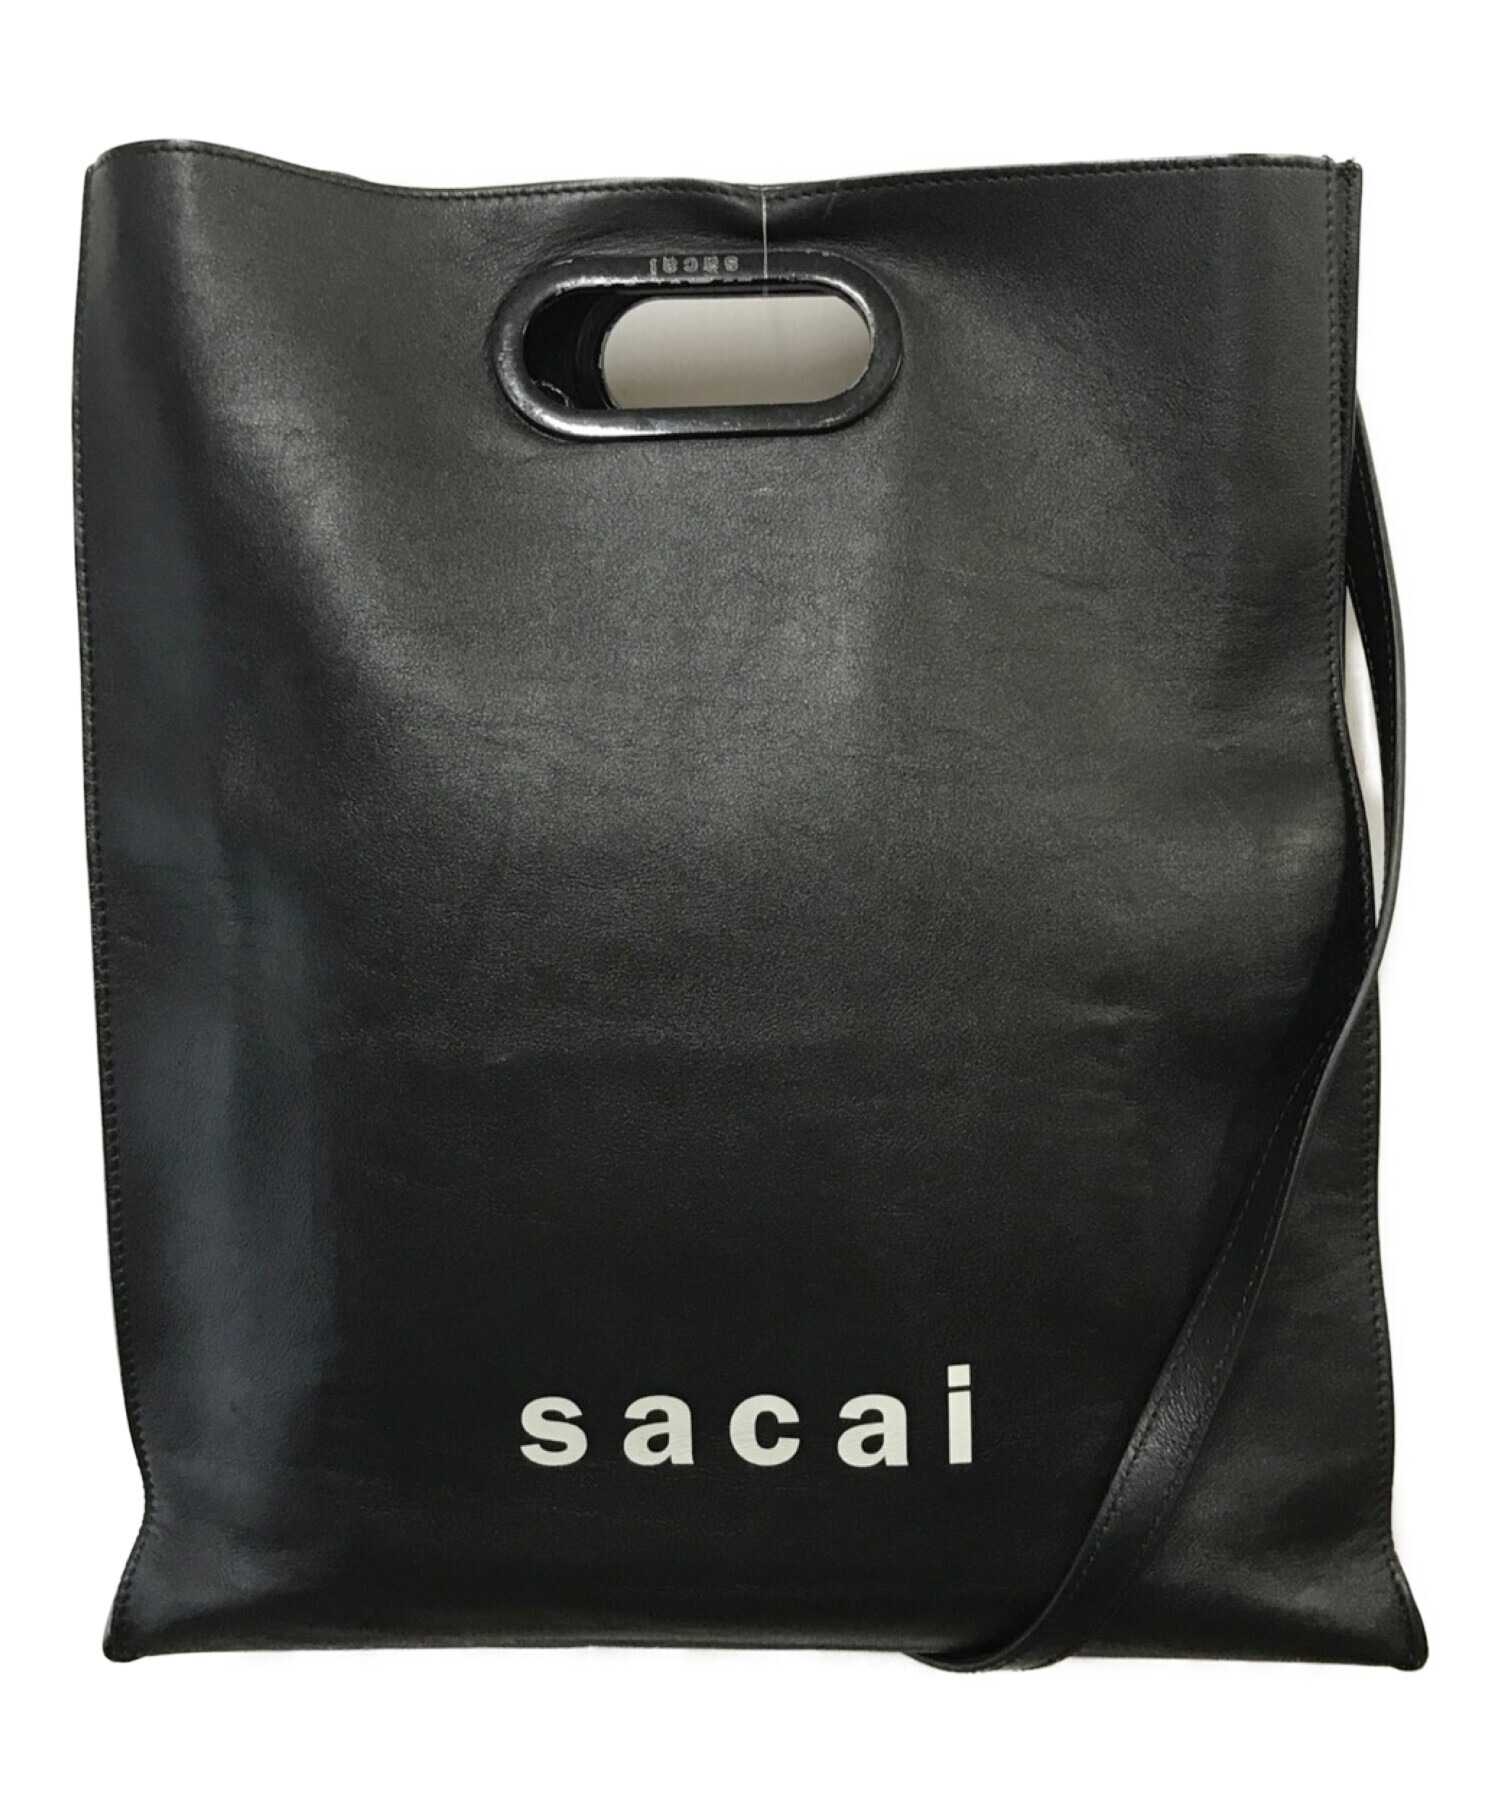 sacai (サカイ) New Shopper Bag Medium ブラック